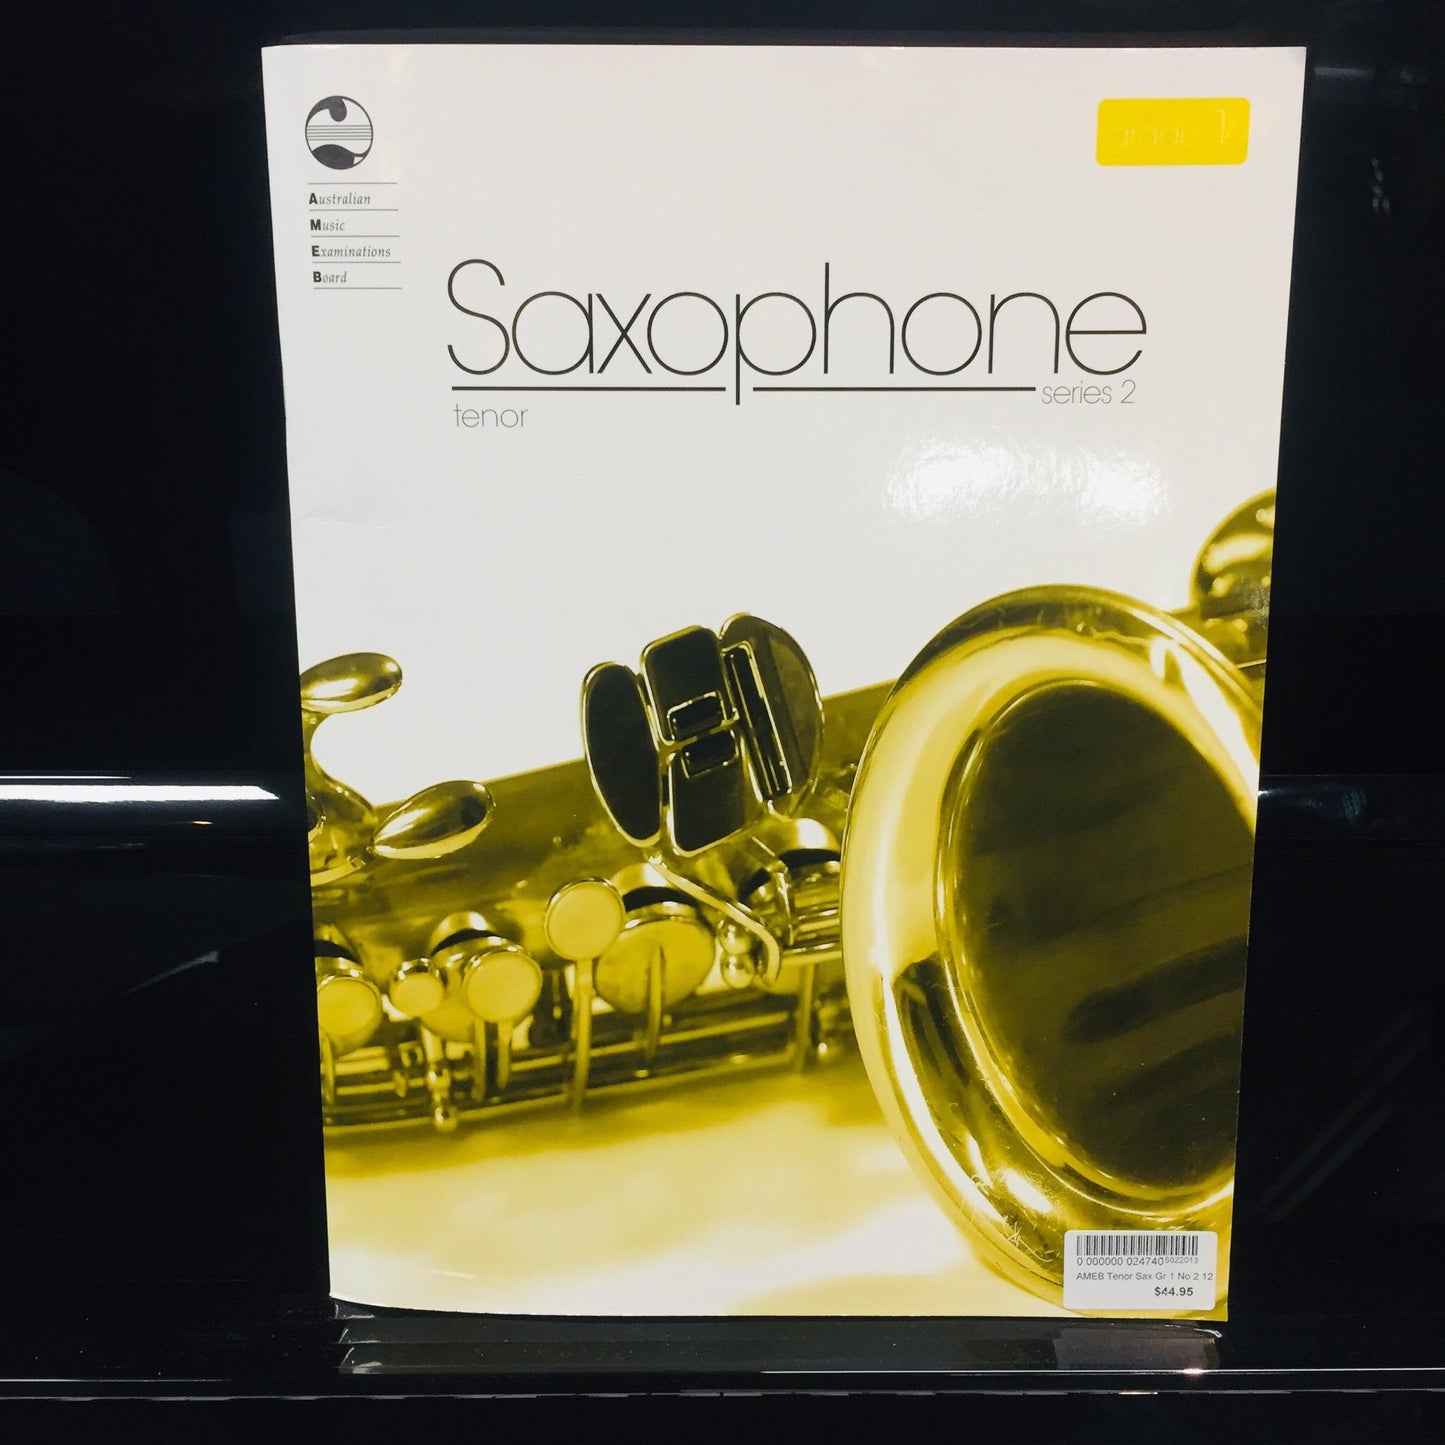 AMEB Saxophone Series 2